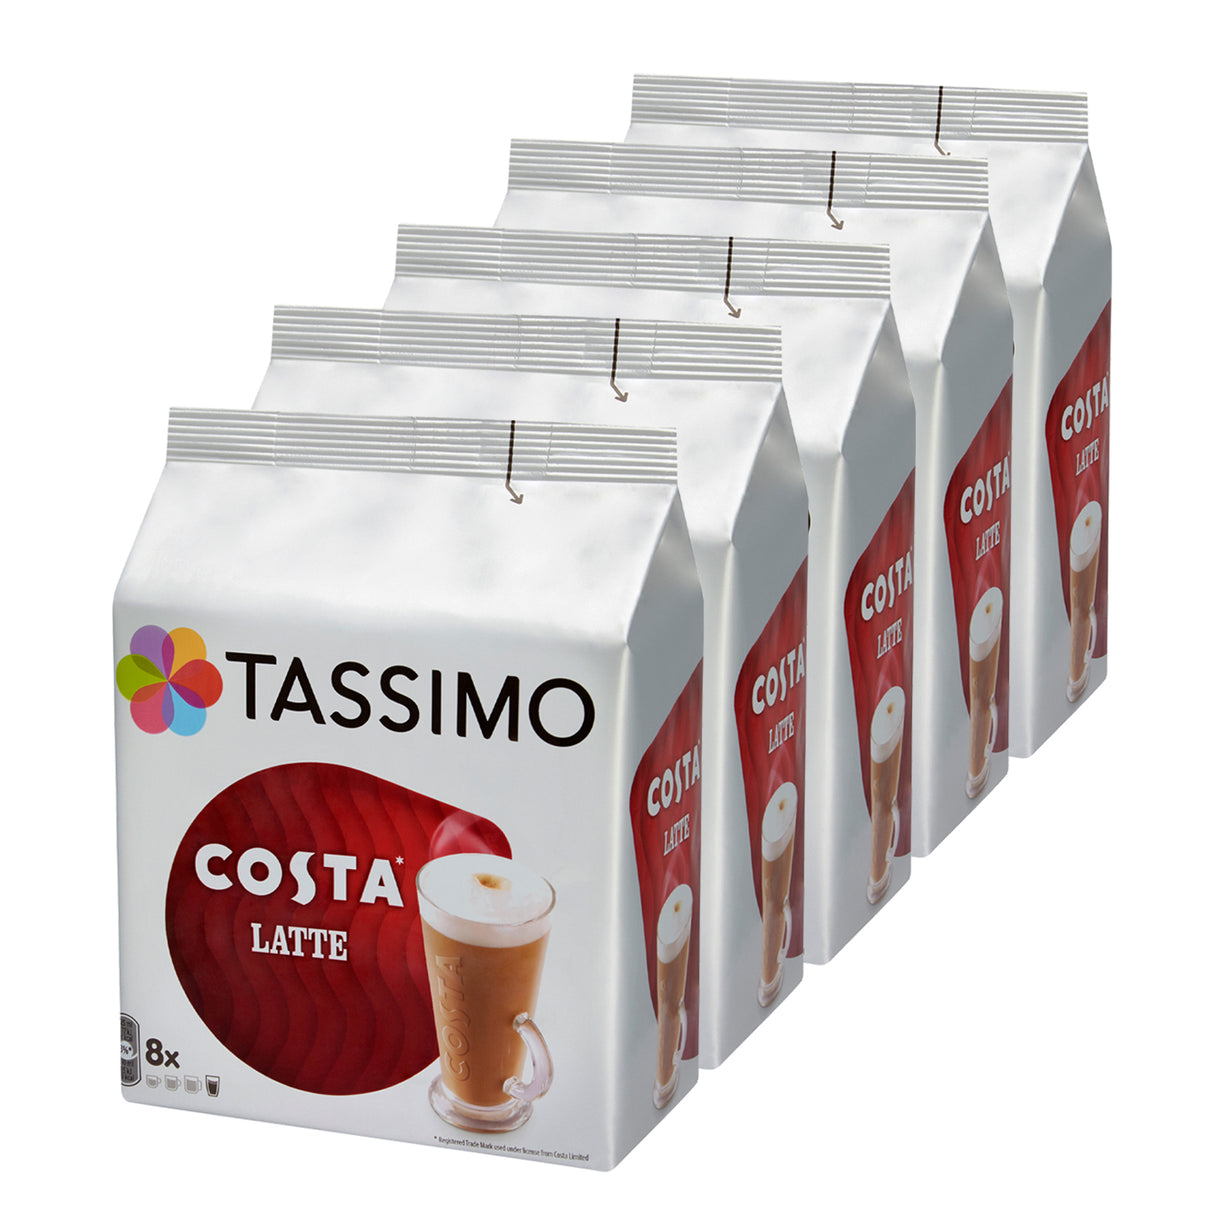 Tassimo Costa Latte 5pack